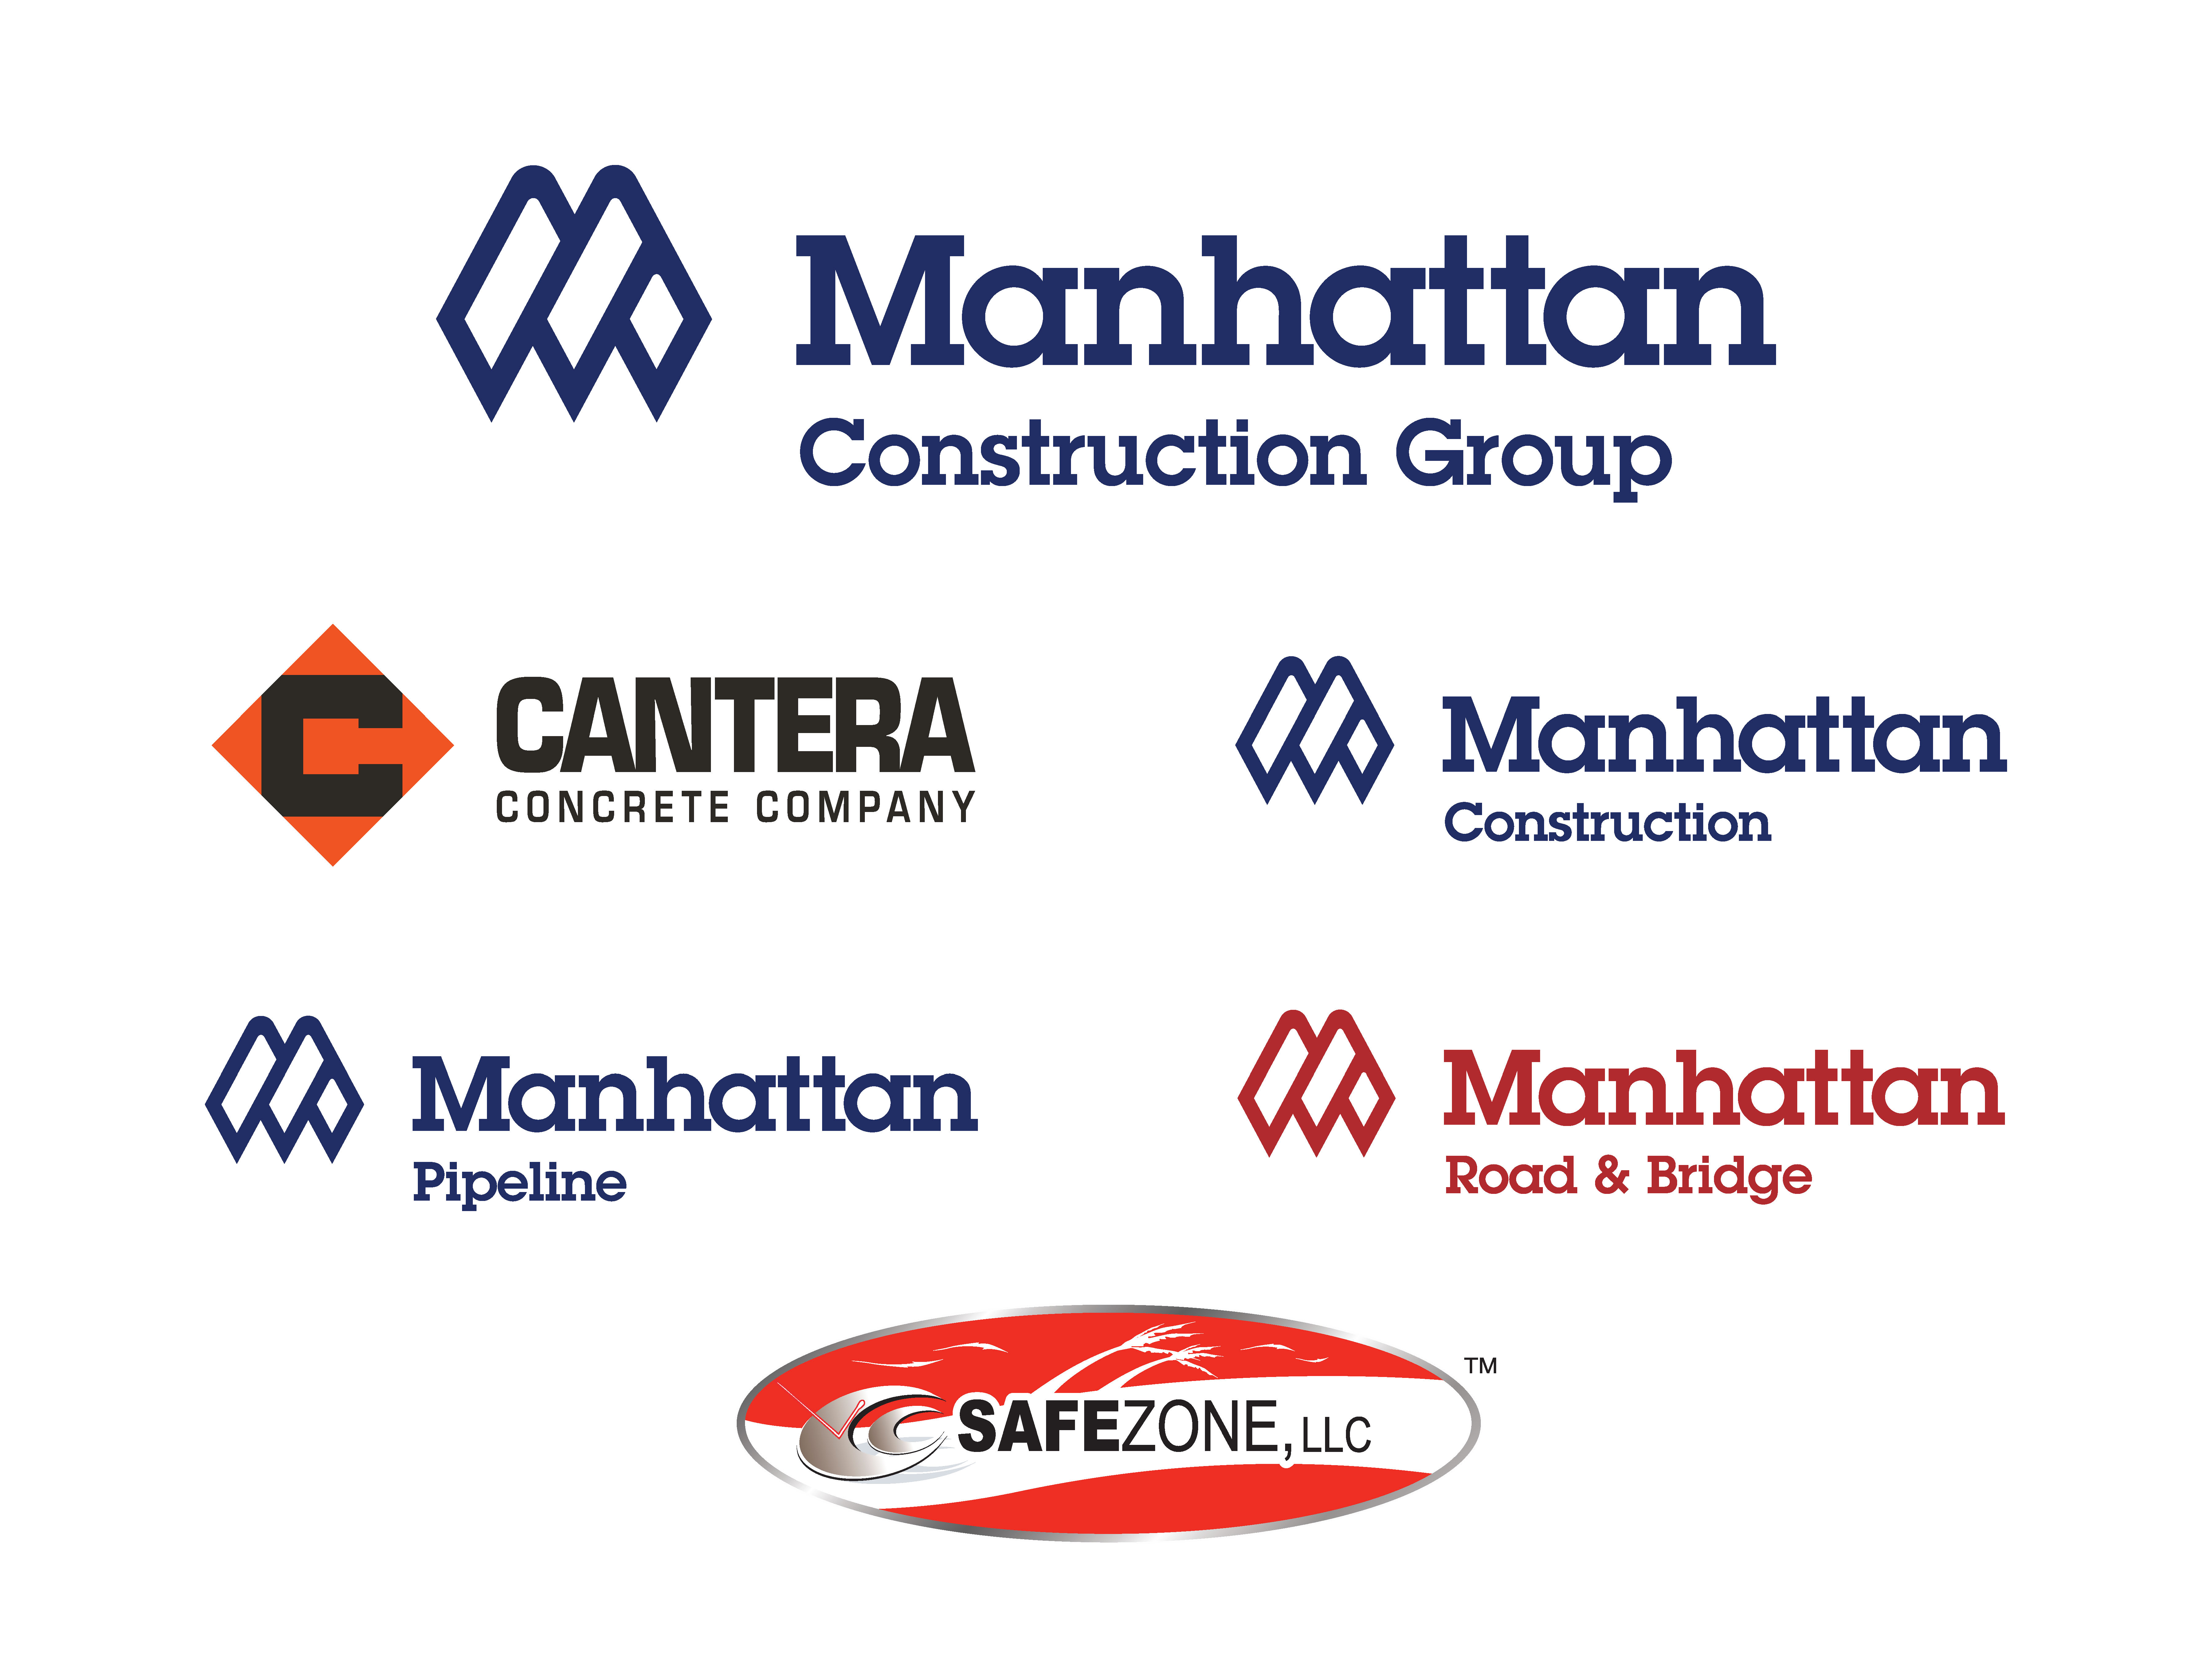 Manhattan Construction Group